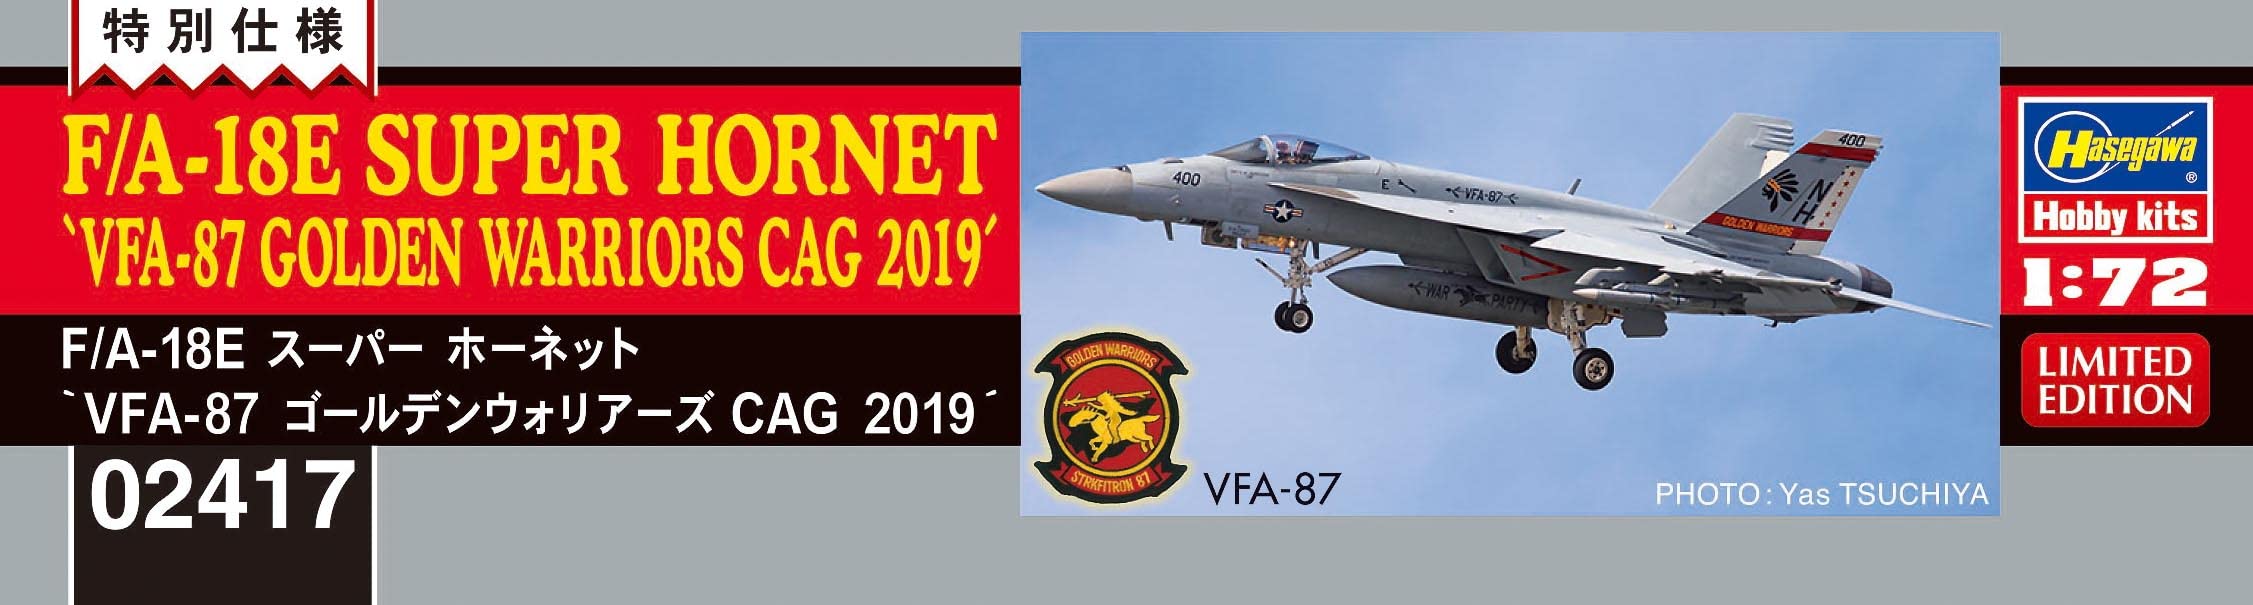 Hasegawa 1/72 F/A-18E SUPER HORNET VFA-87 GOLDEN WARRIORS CAG 2019 kit 02417 NEW_5